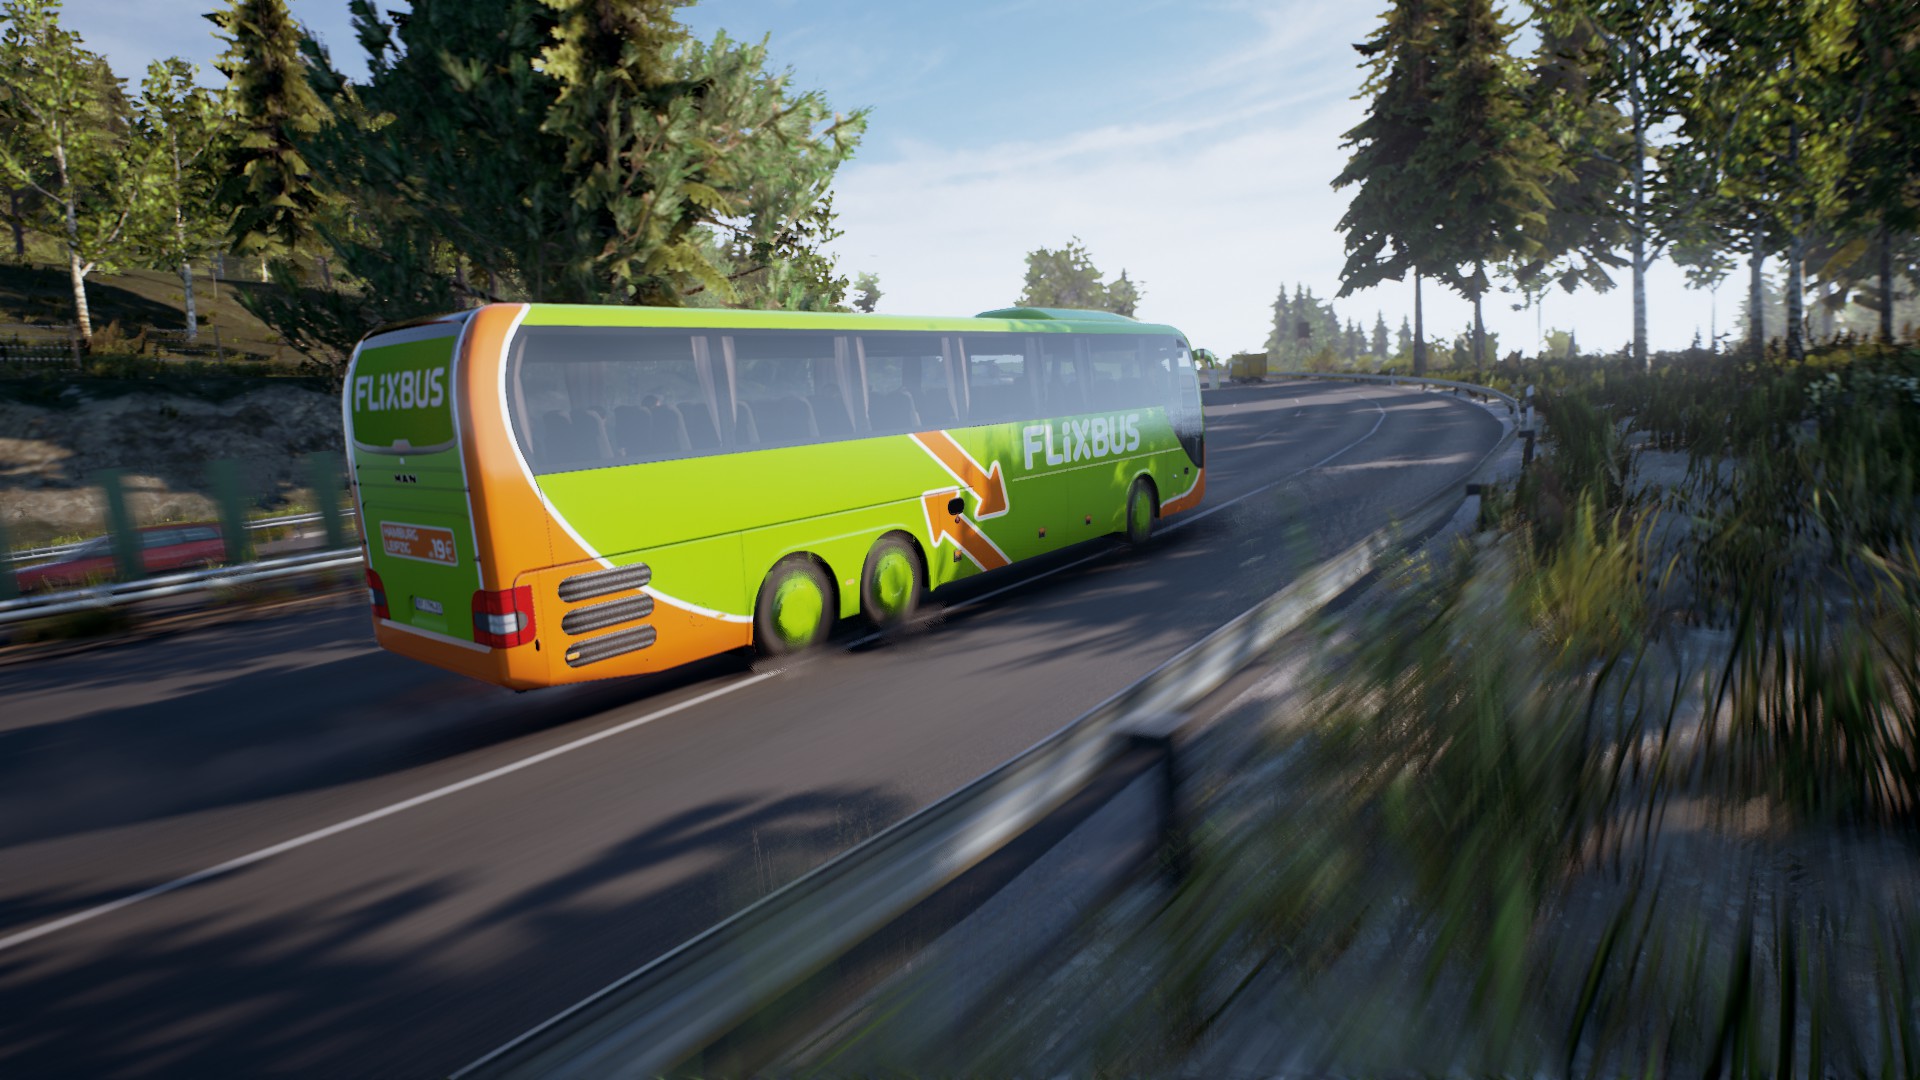 fernbus simulator flipped bus